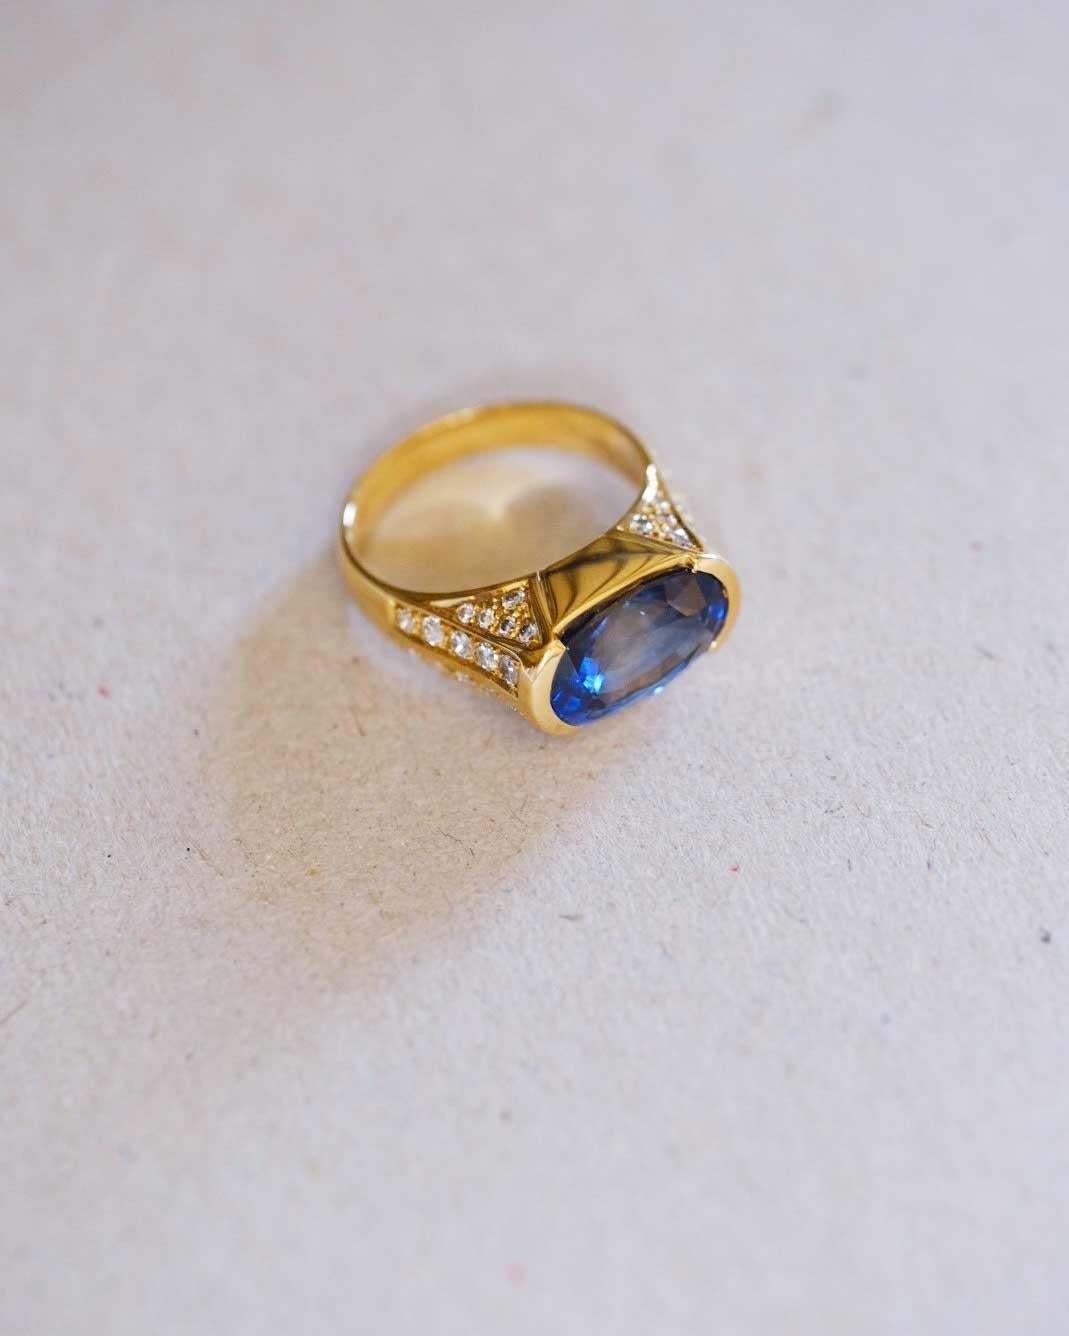 Leyser 18k Yellow Gold (6.41g) ring, set with:

1x Sapphire (fac., no heat, oval, 12×7.5mm, 4.70ct)

40x Diamonds (brilliant-cut, 1.2-1.3mm, TW/vsi, 0.51ct)